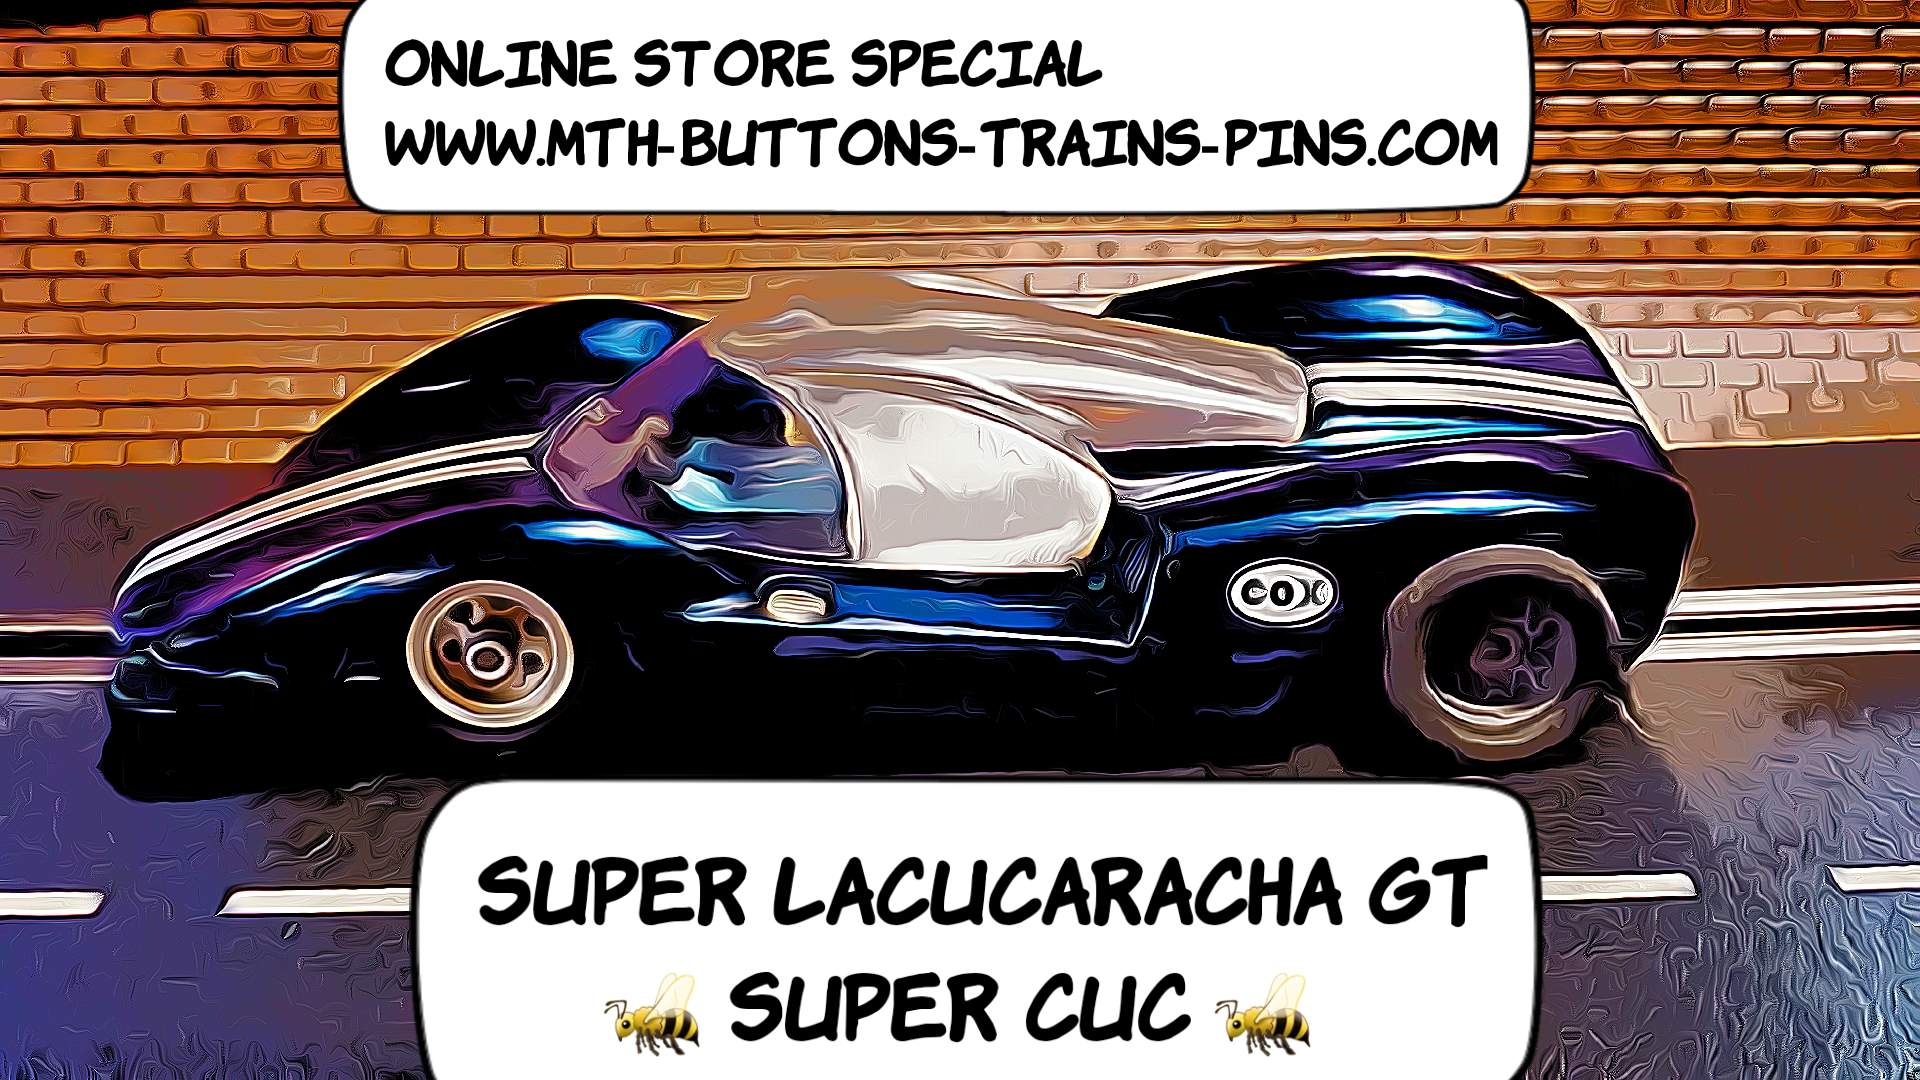 *Exclusive Offer SAVE $200 off our Ebay Store Price* COX Super La Cucaracha “Super Cuc” 1:24 Scale Slot Car, Nicely Restored 